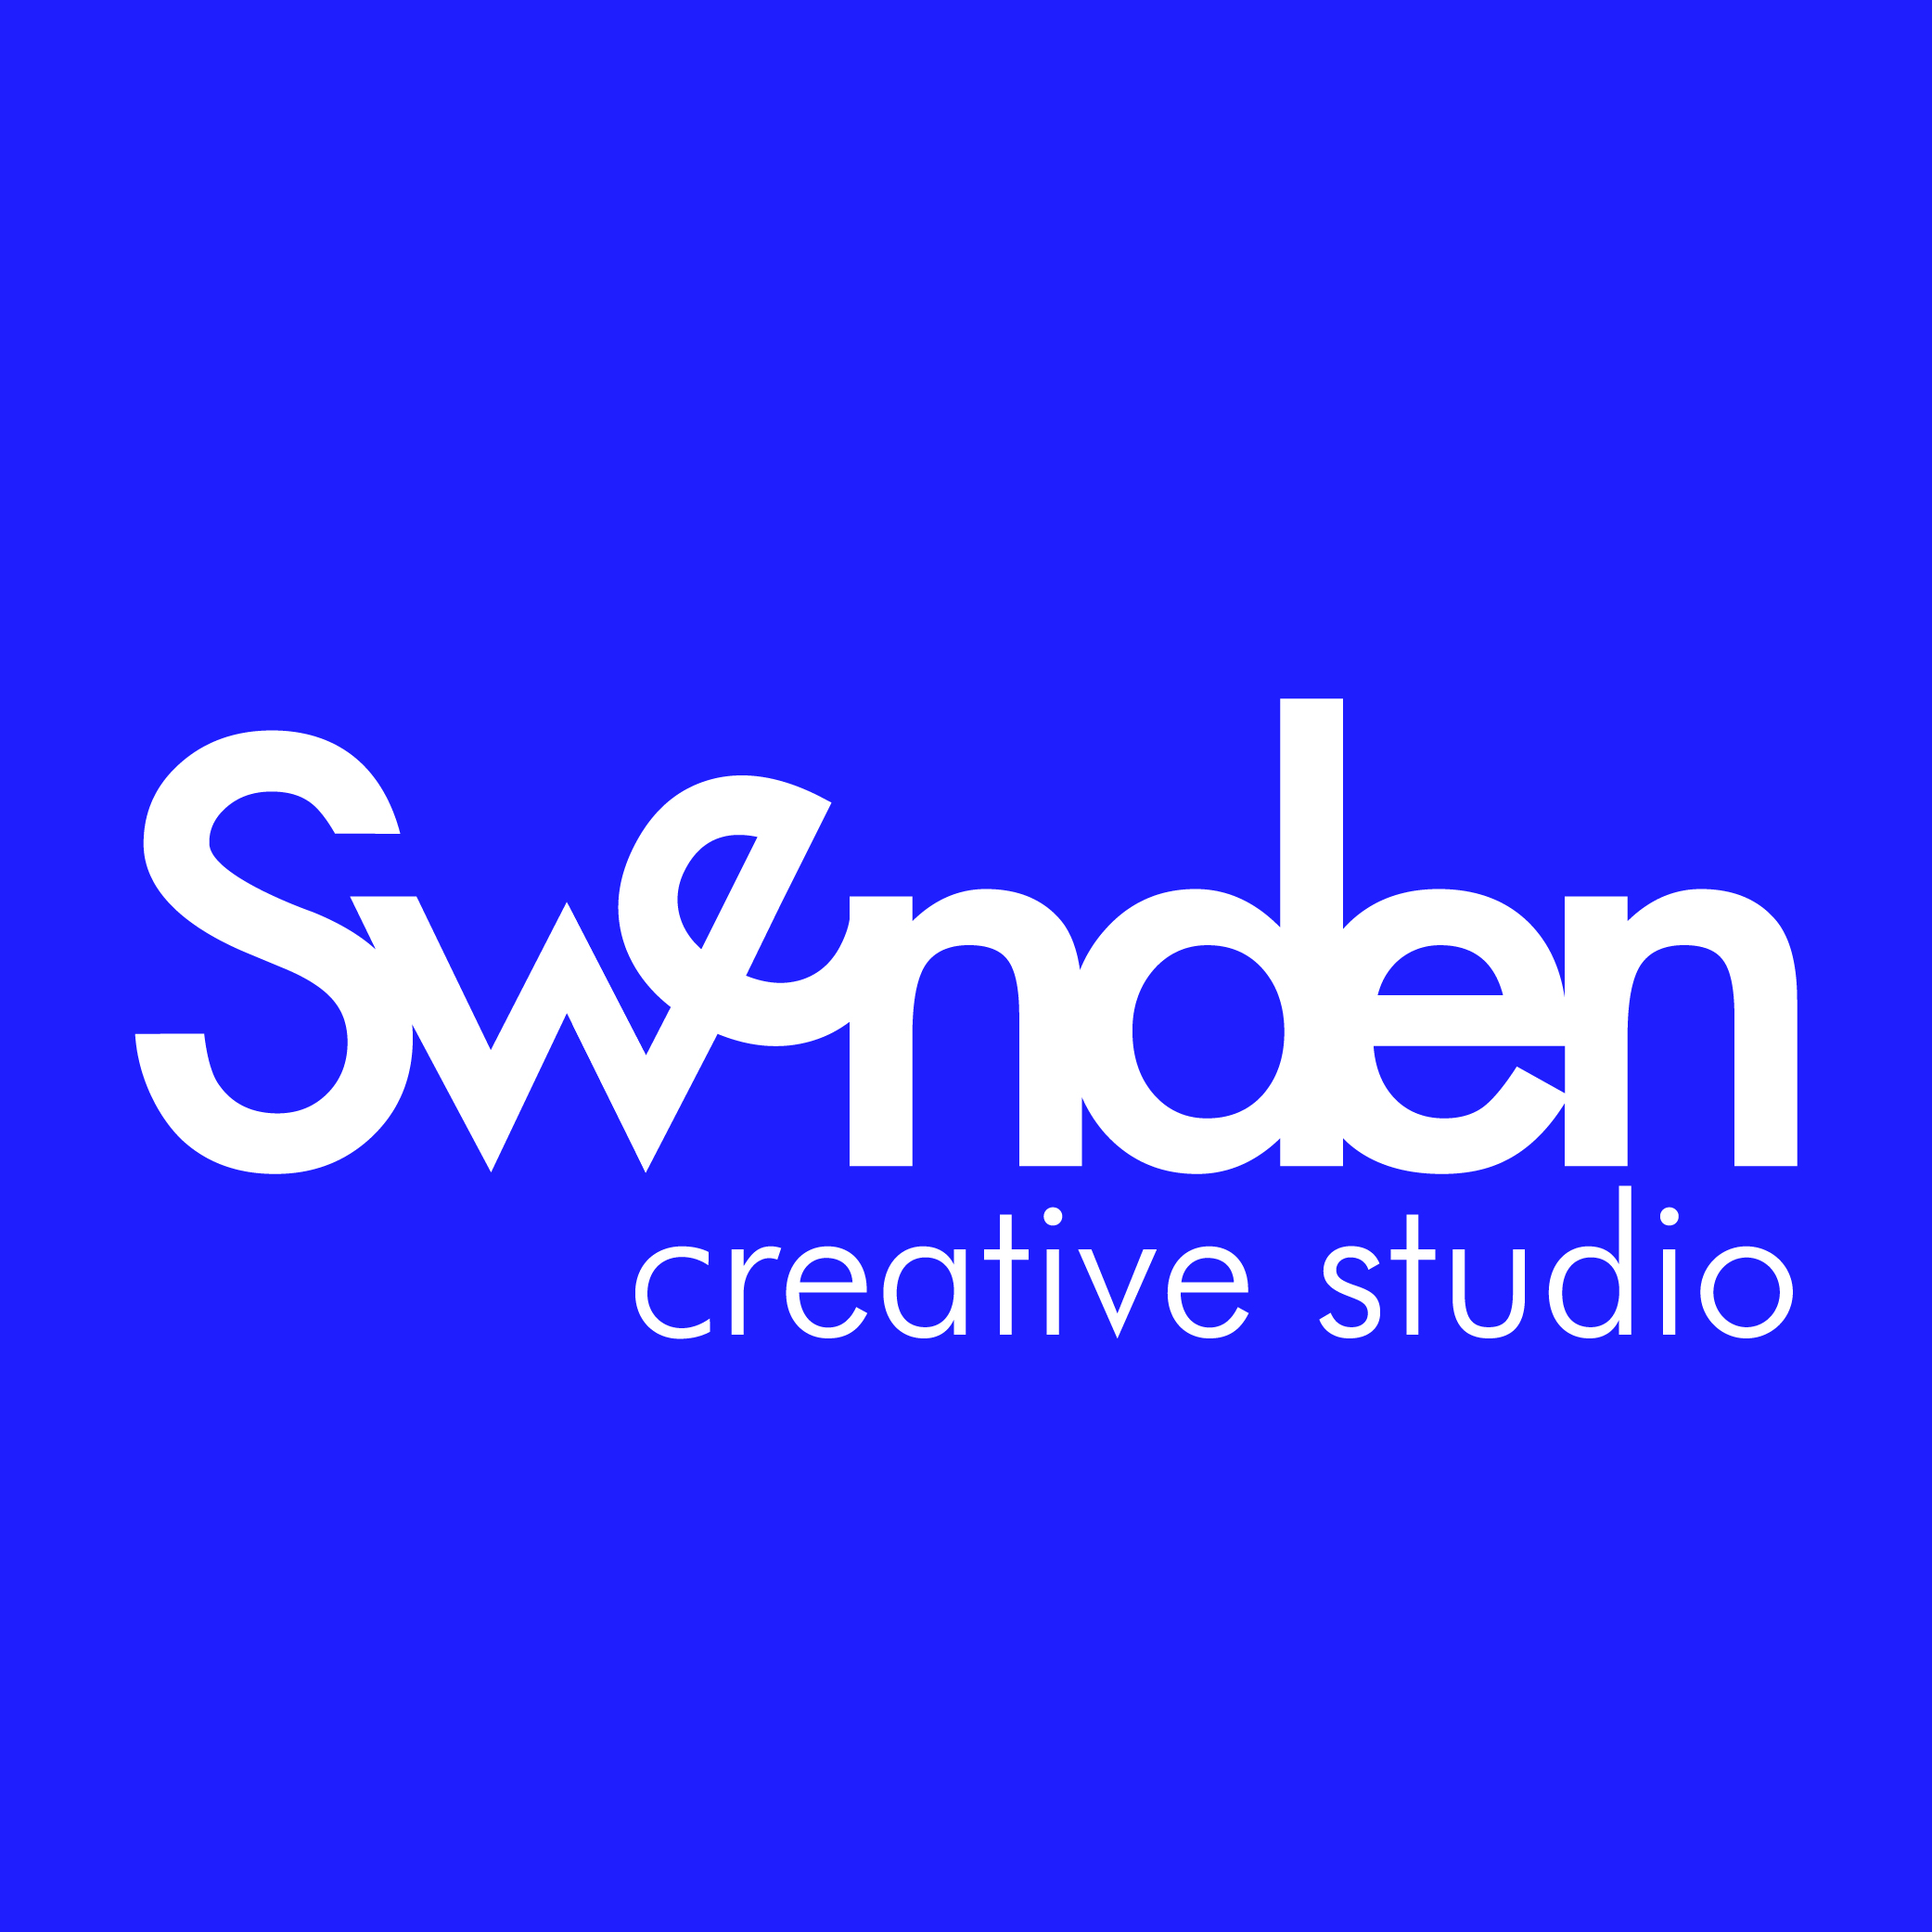 Swenden Studio